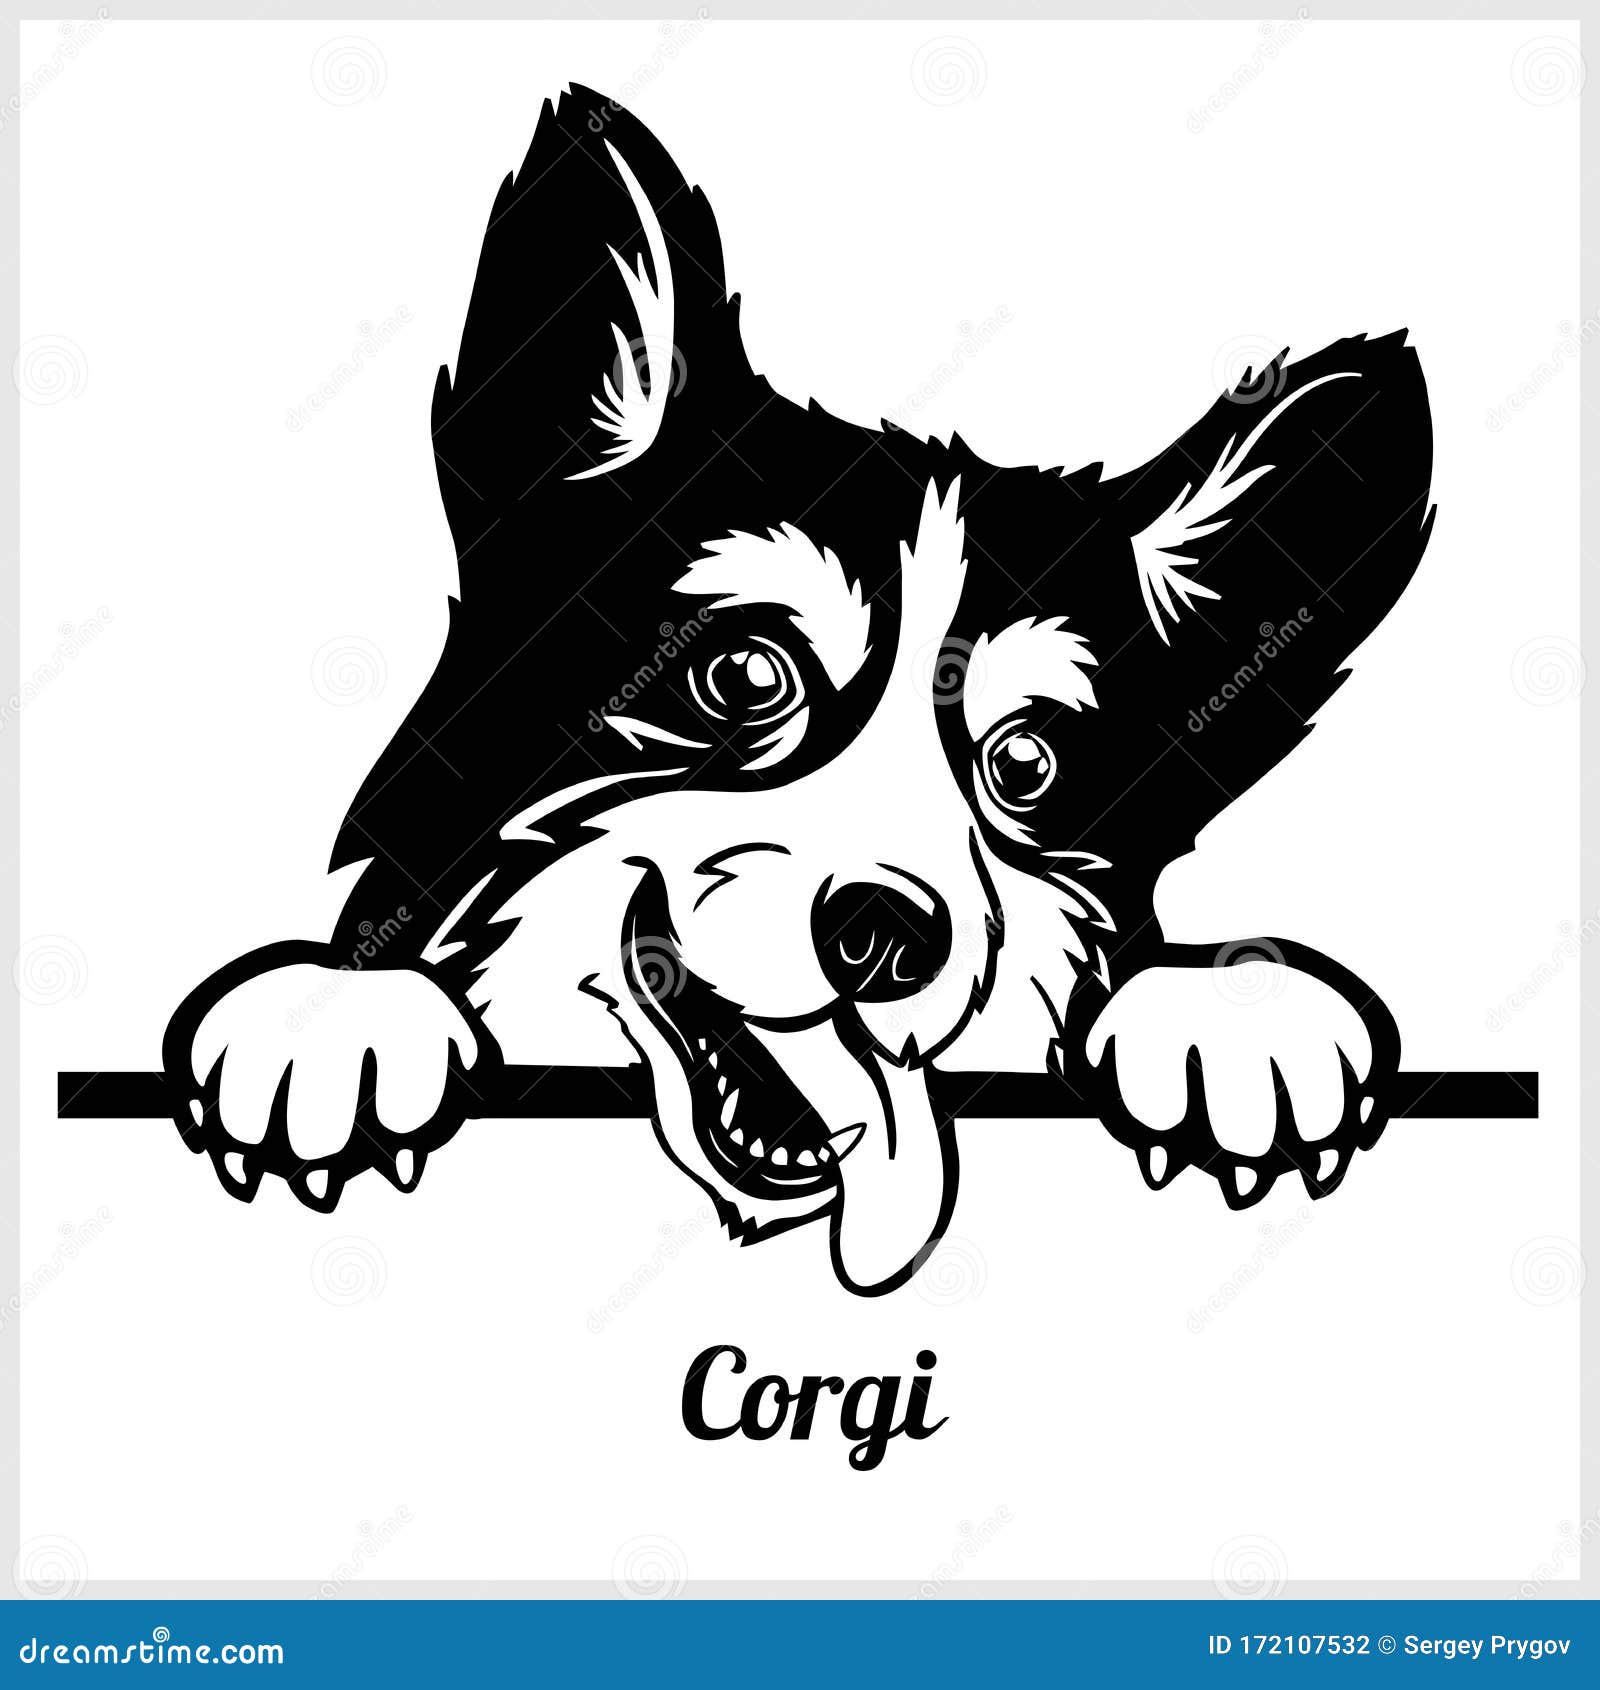 Corgi - Peeking Dogs - Breed Face Head Isolated on White Stock Vector